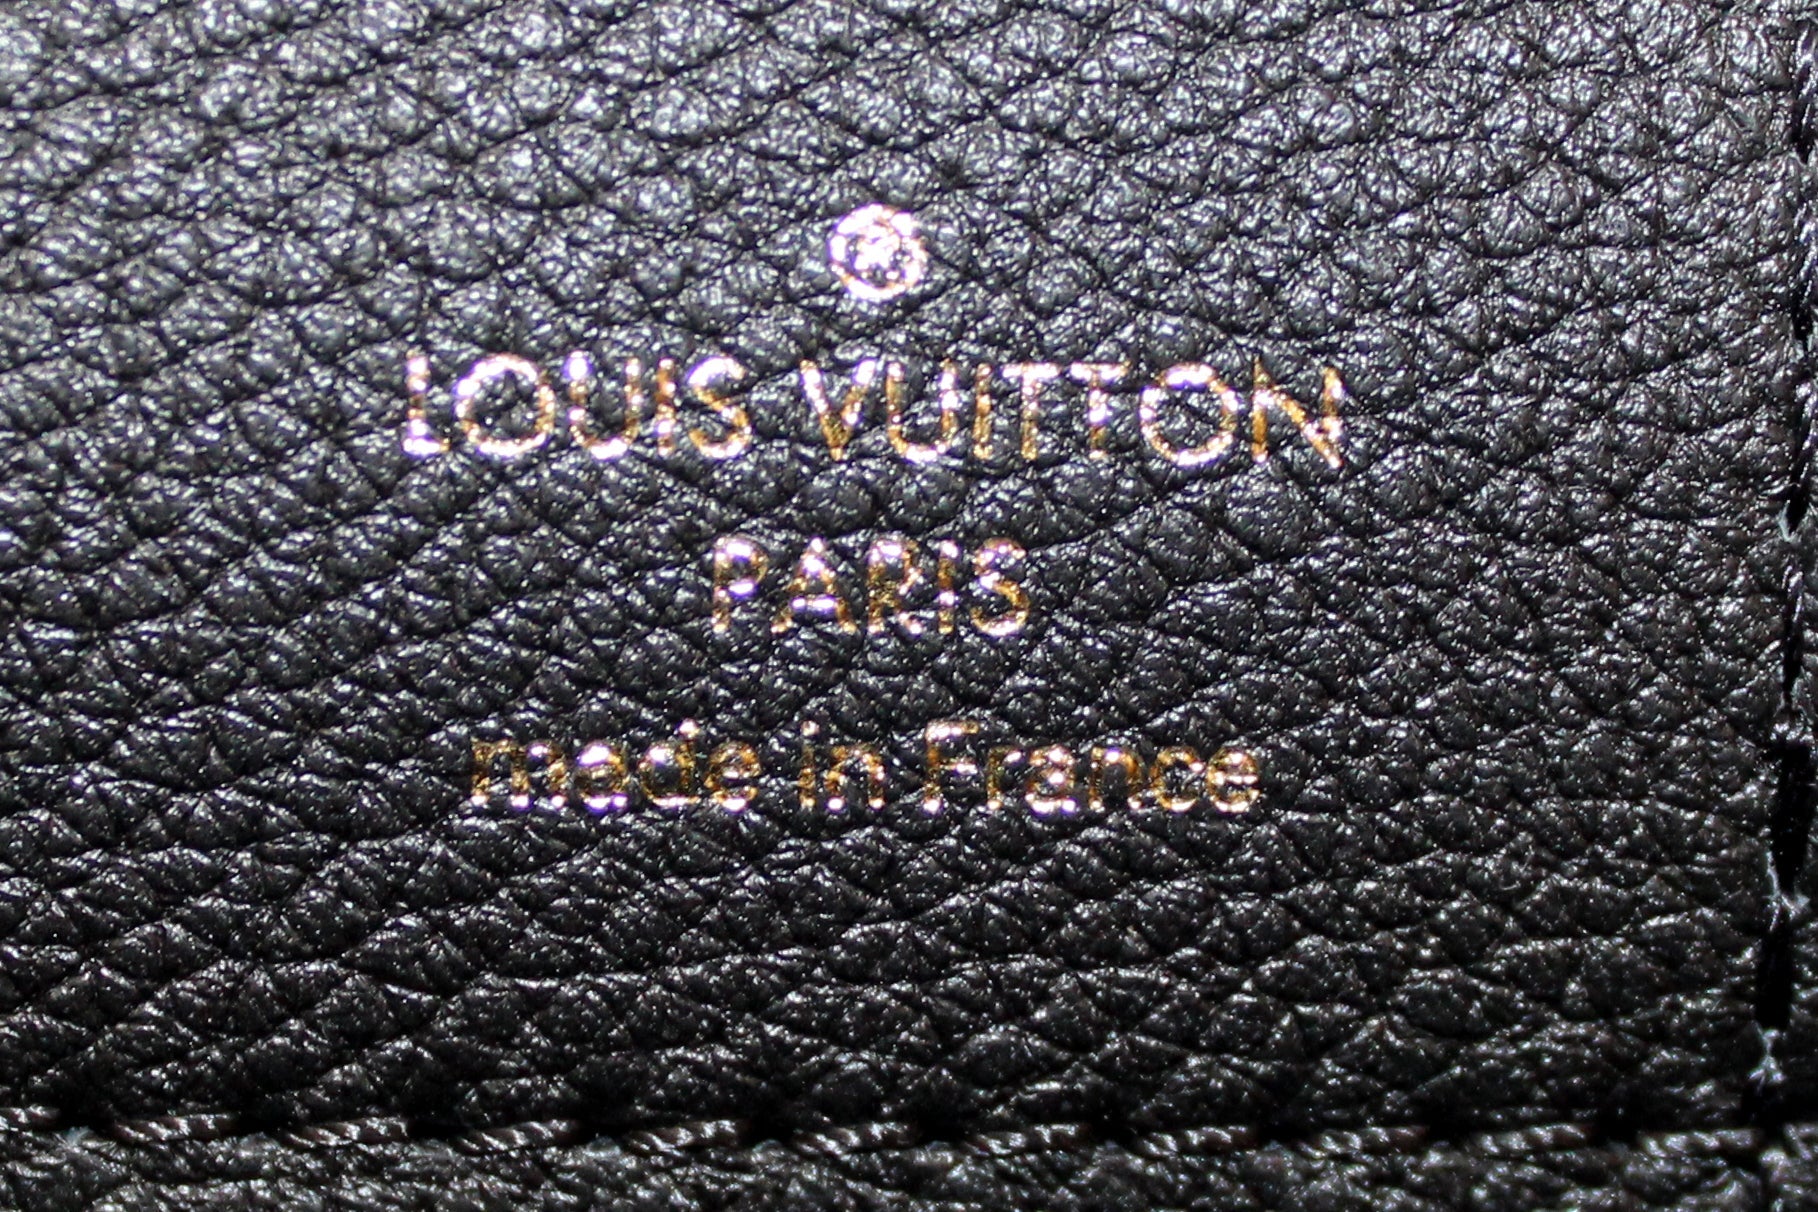 Louis Vuitton Damier Ebene Canvas LV Riverside — Edit38 NY